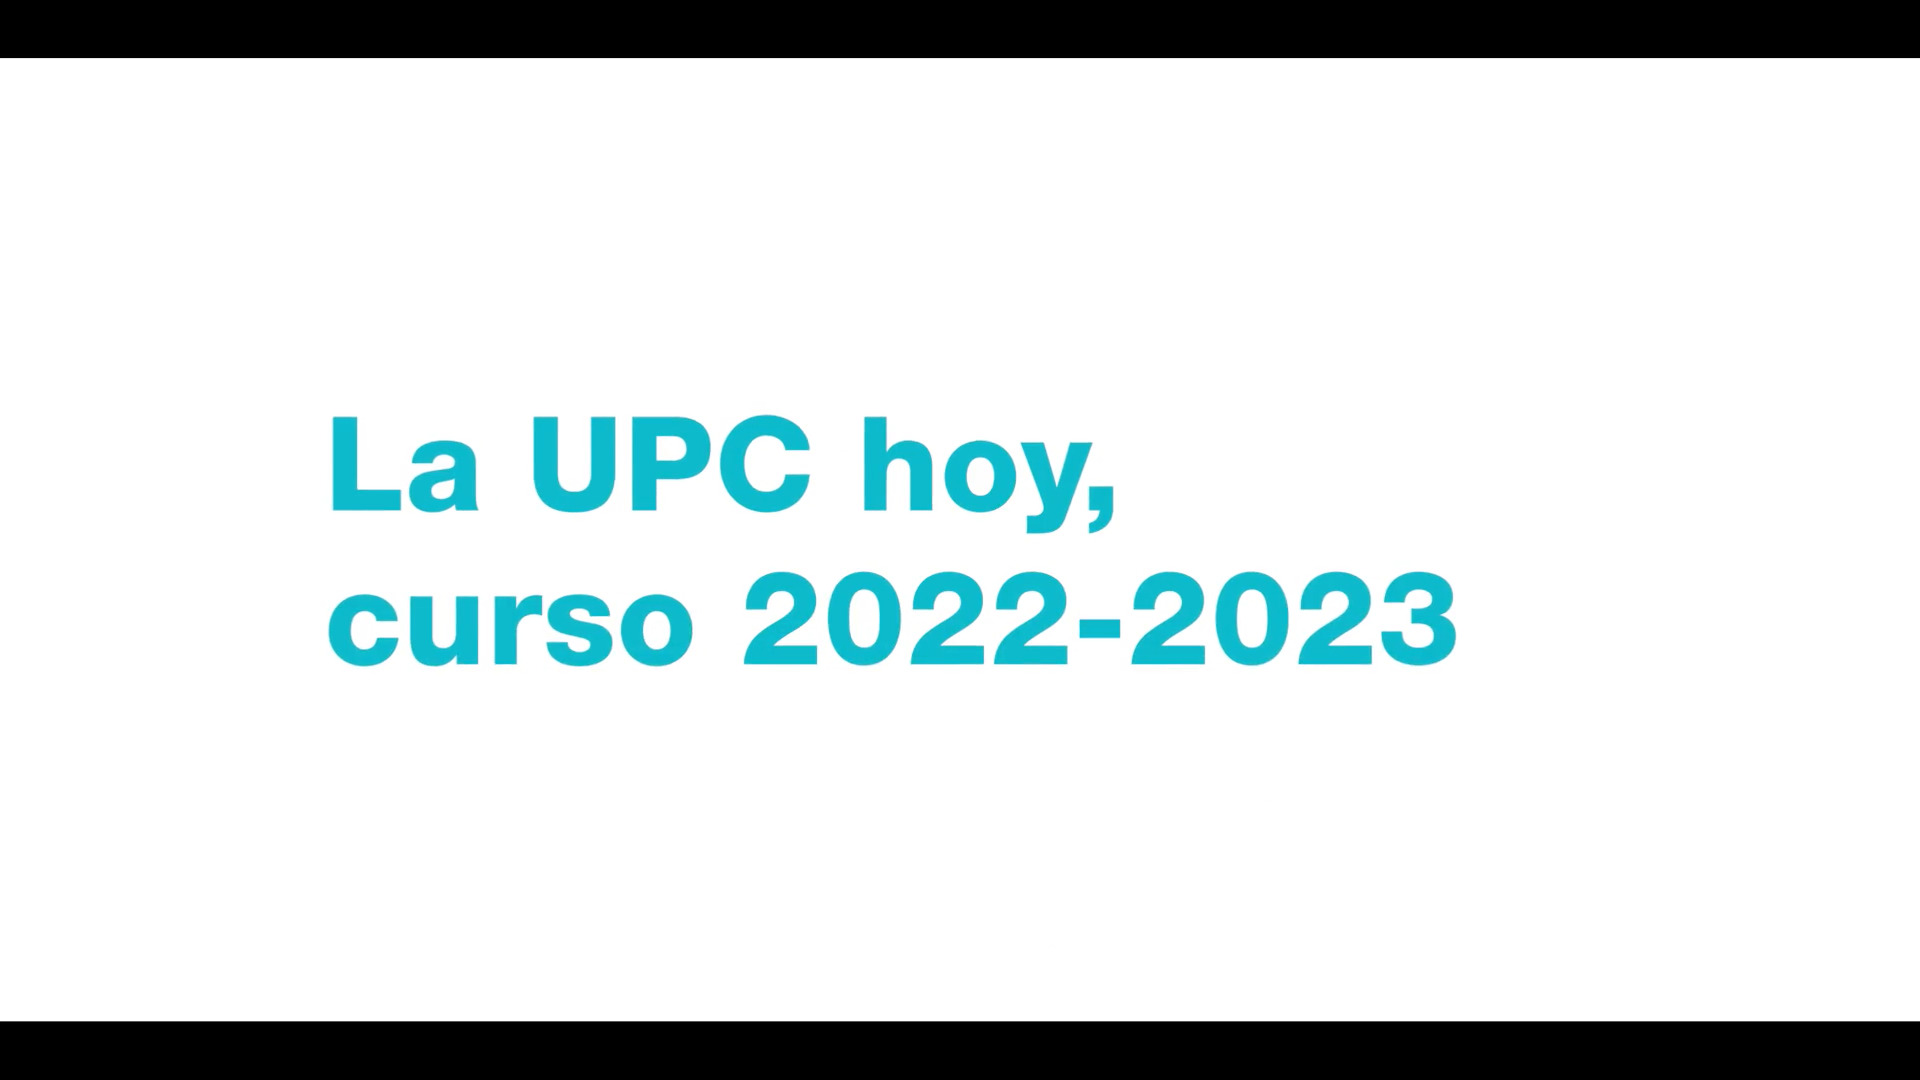 La UPC hoy, curso 2022-2023